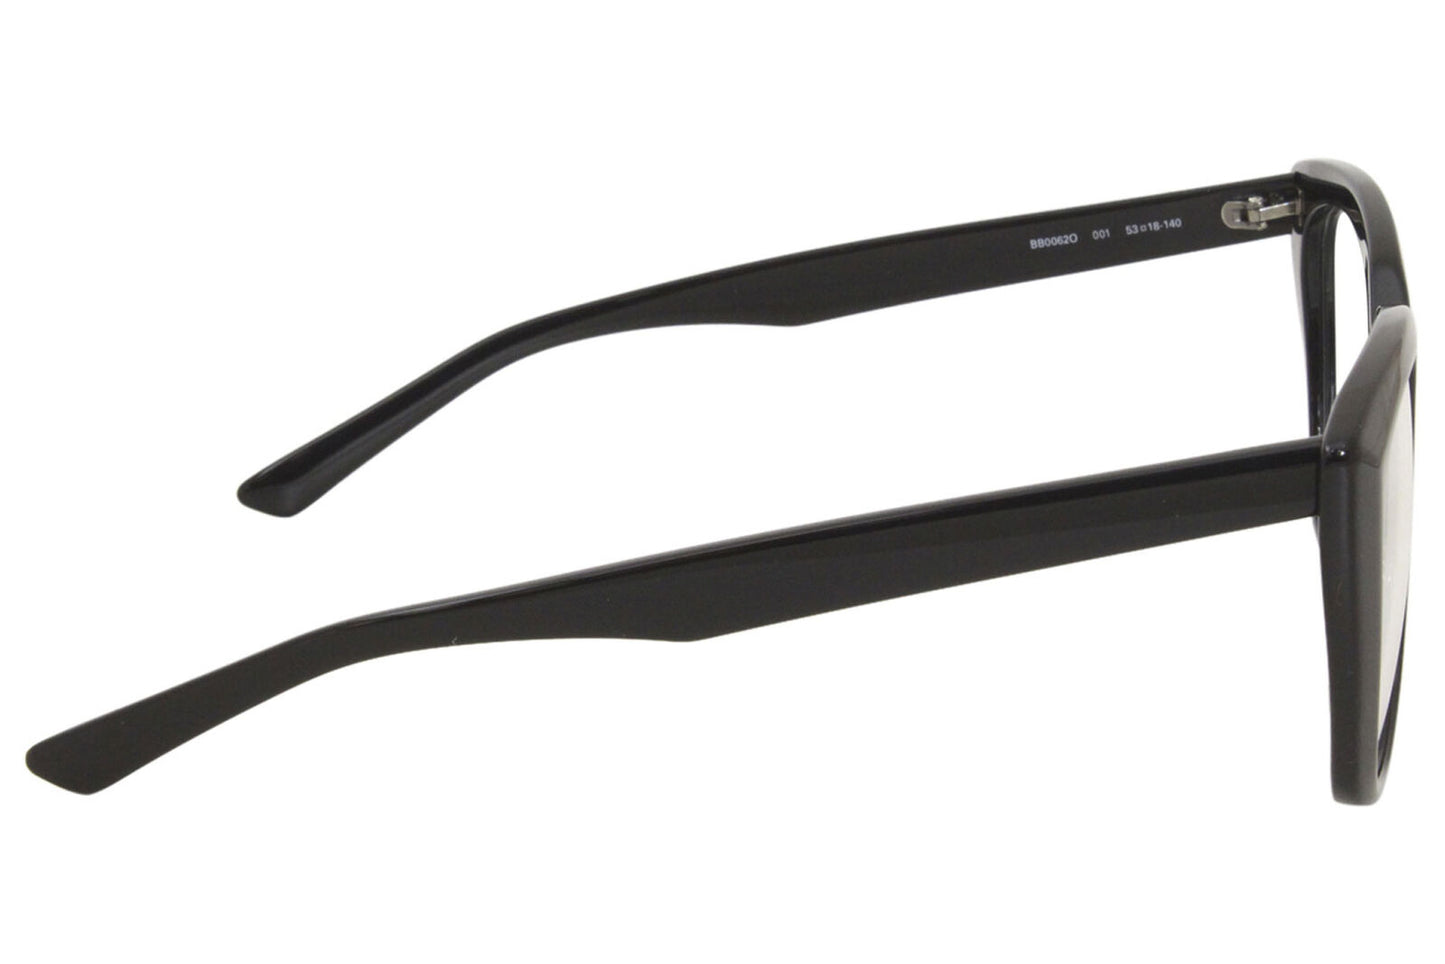 Balenciaga BB0062o-001 53mm New Eyeglasses